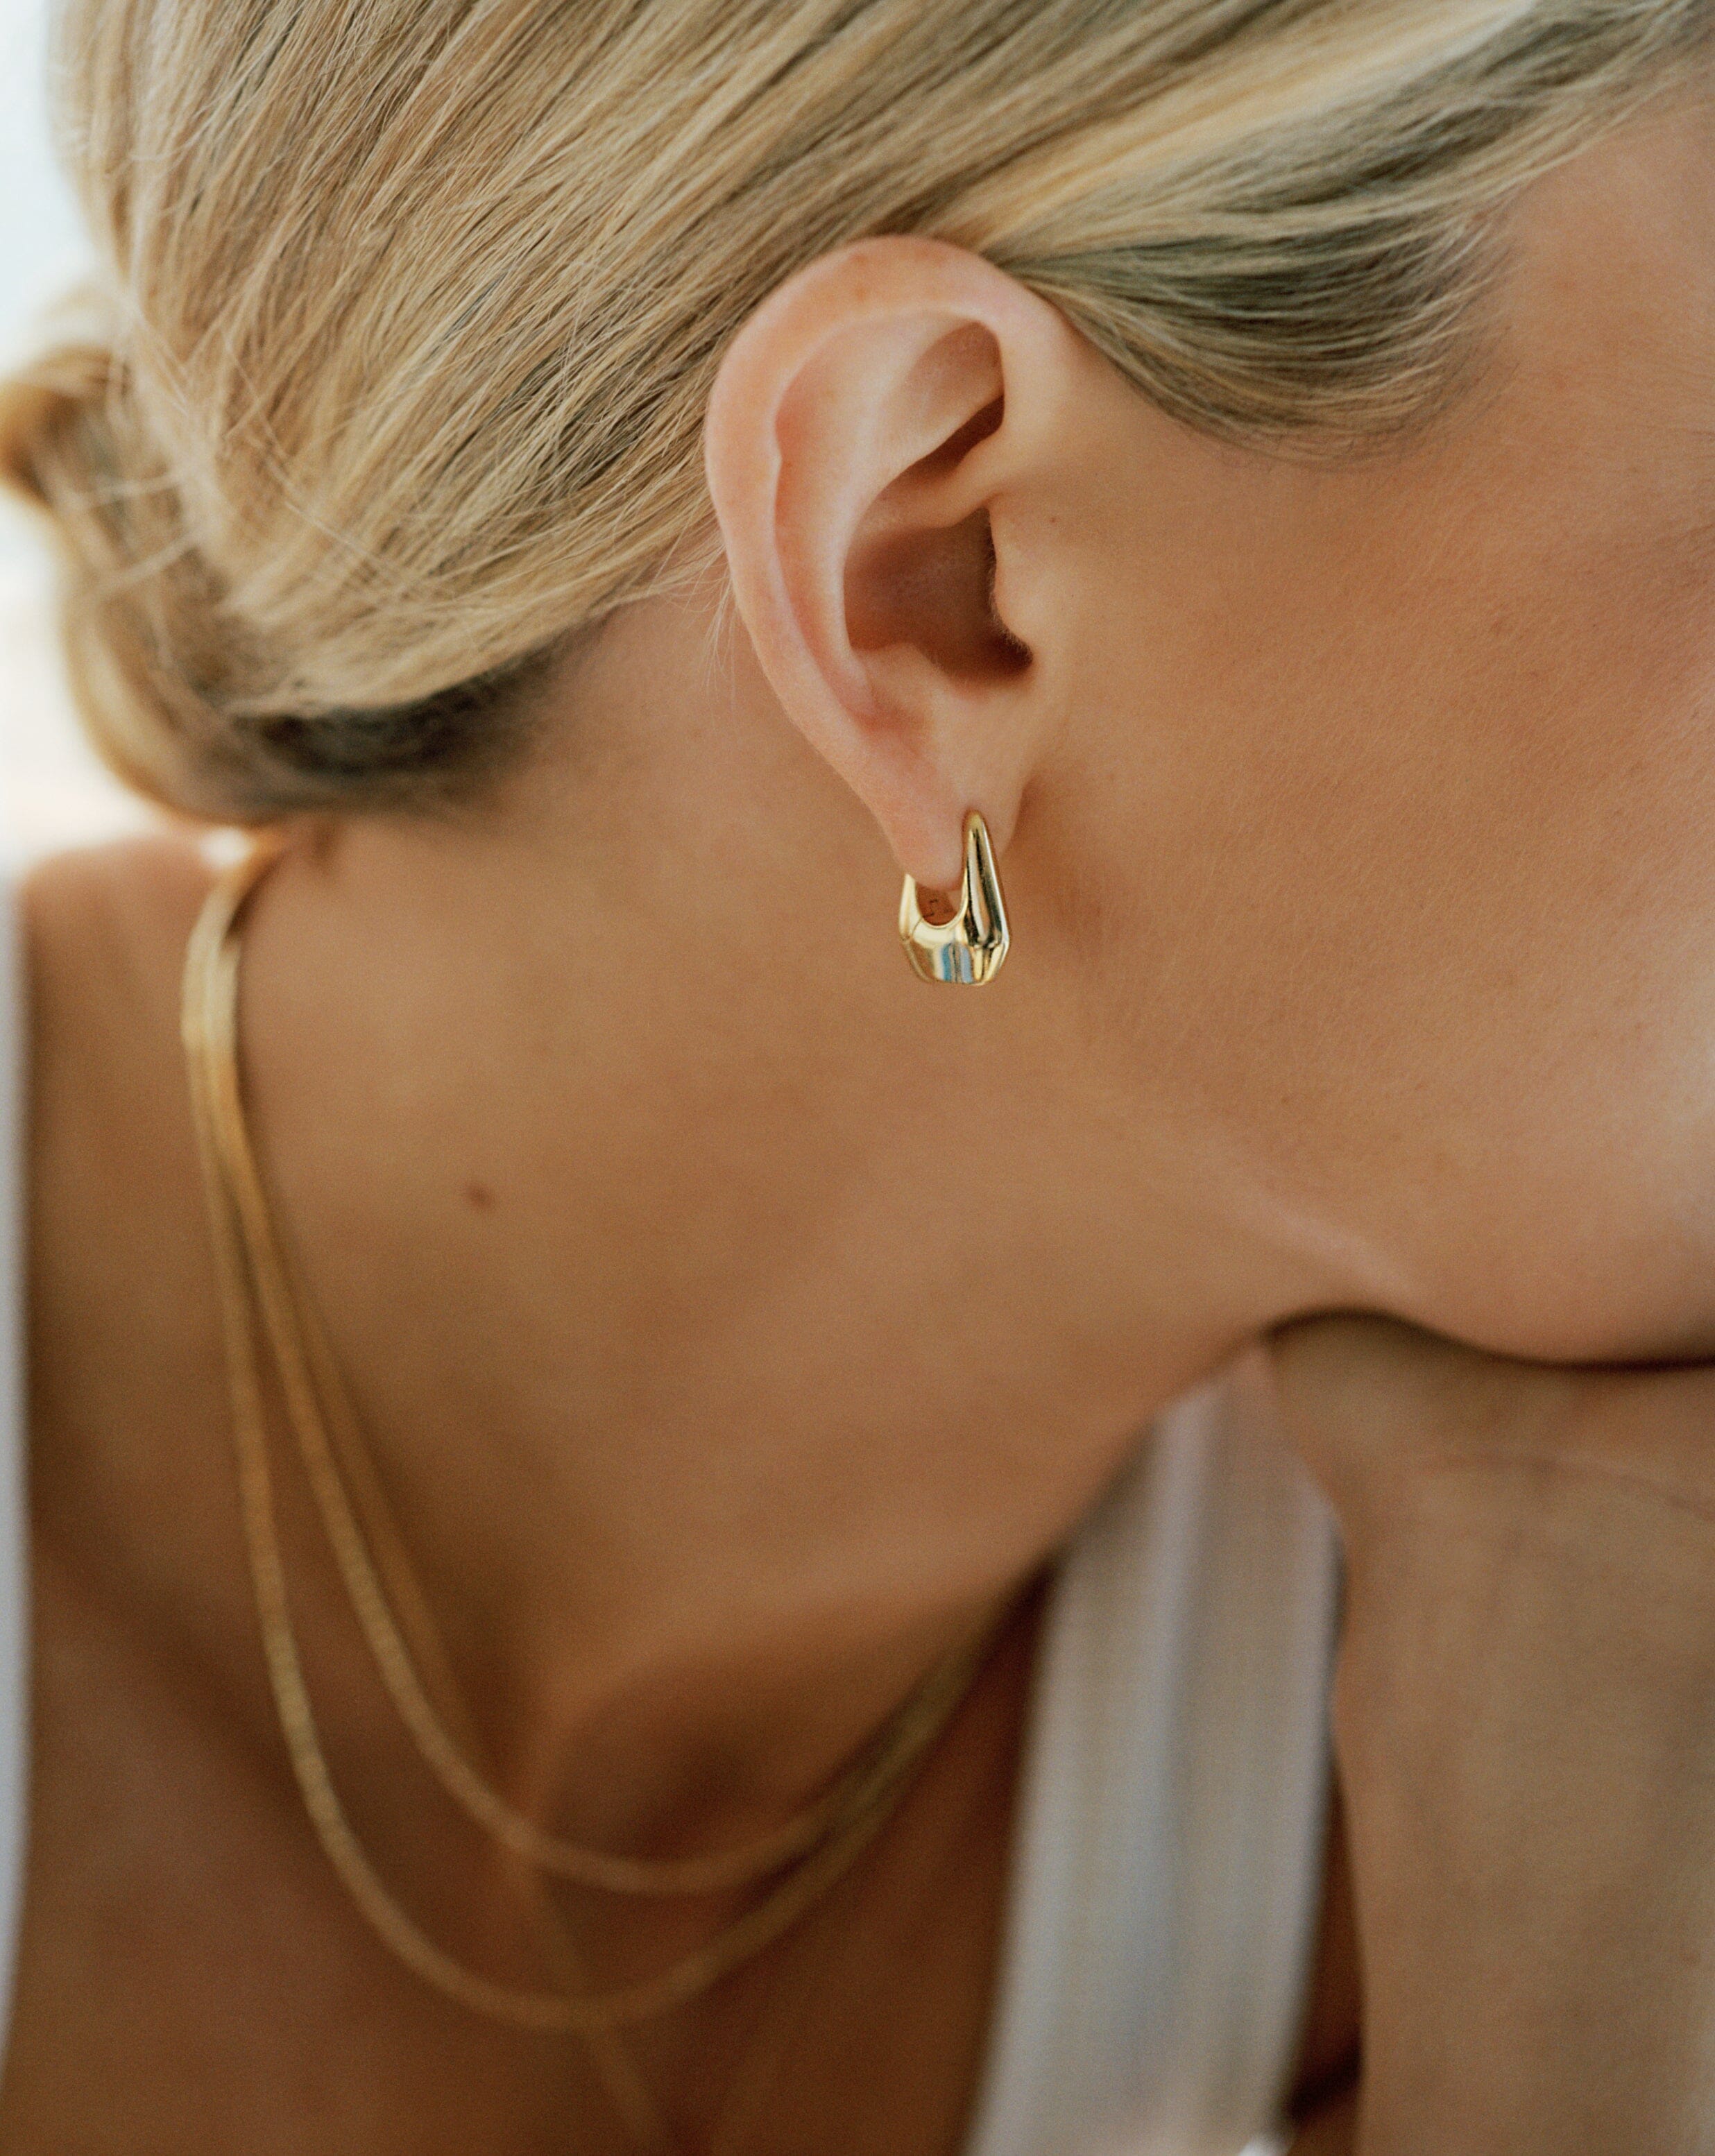 🌹Beautiful Big Gold Earring Designs With Light Weight || Apsara Fashions -  YouTube | Big earrings gold, Gold earrings designs, Gold bride jewelry